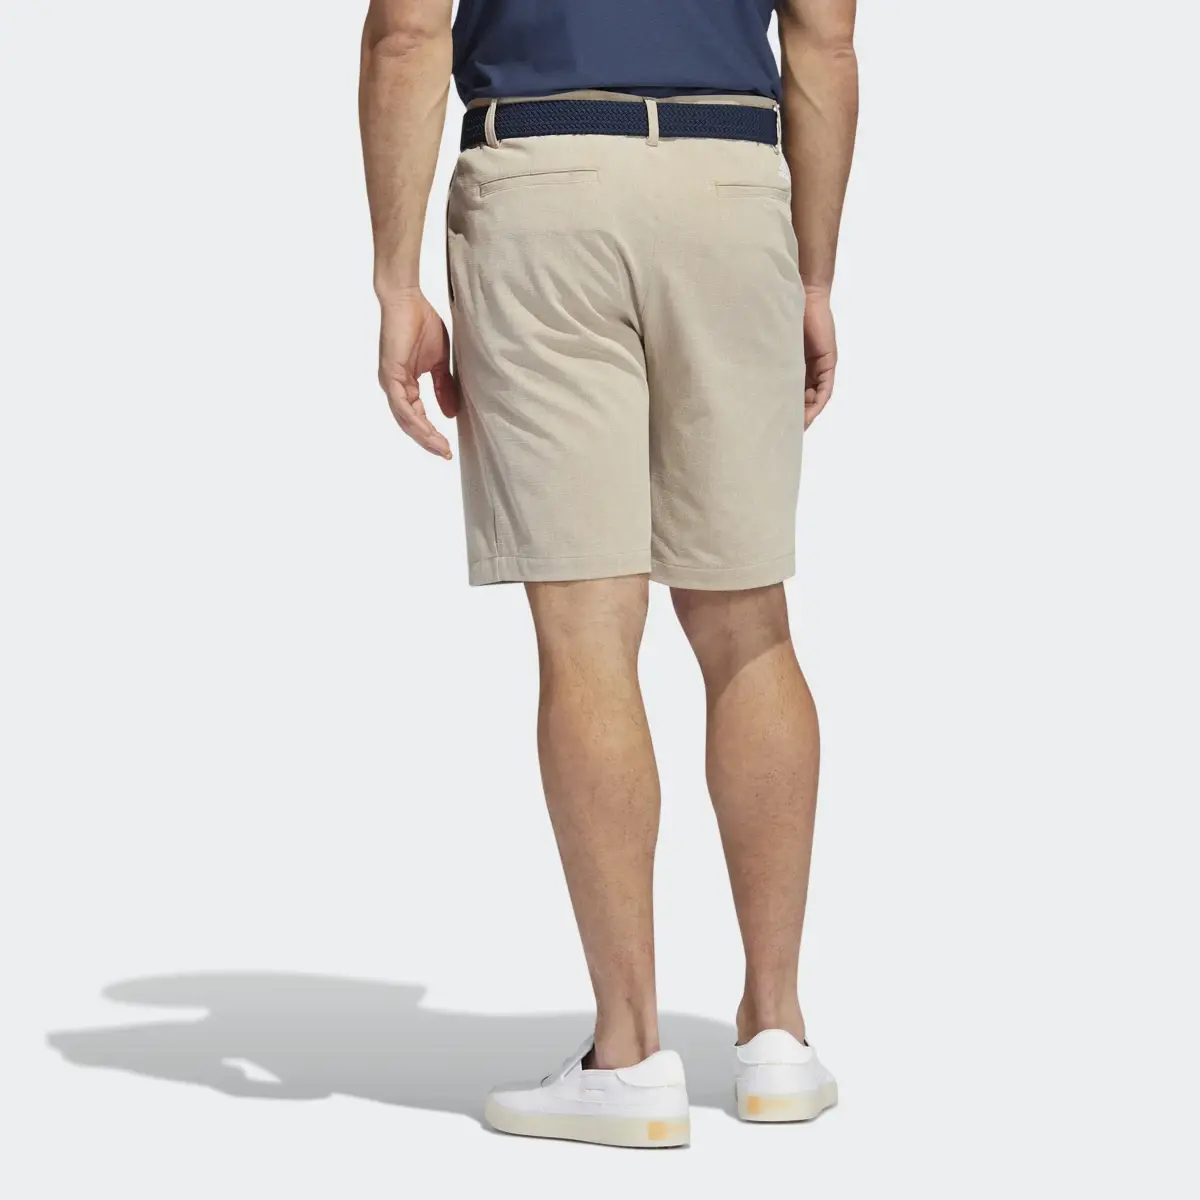 Adidas Crosshatch Shorts. 2